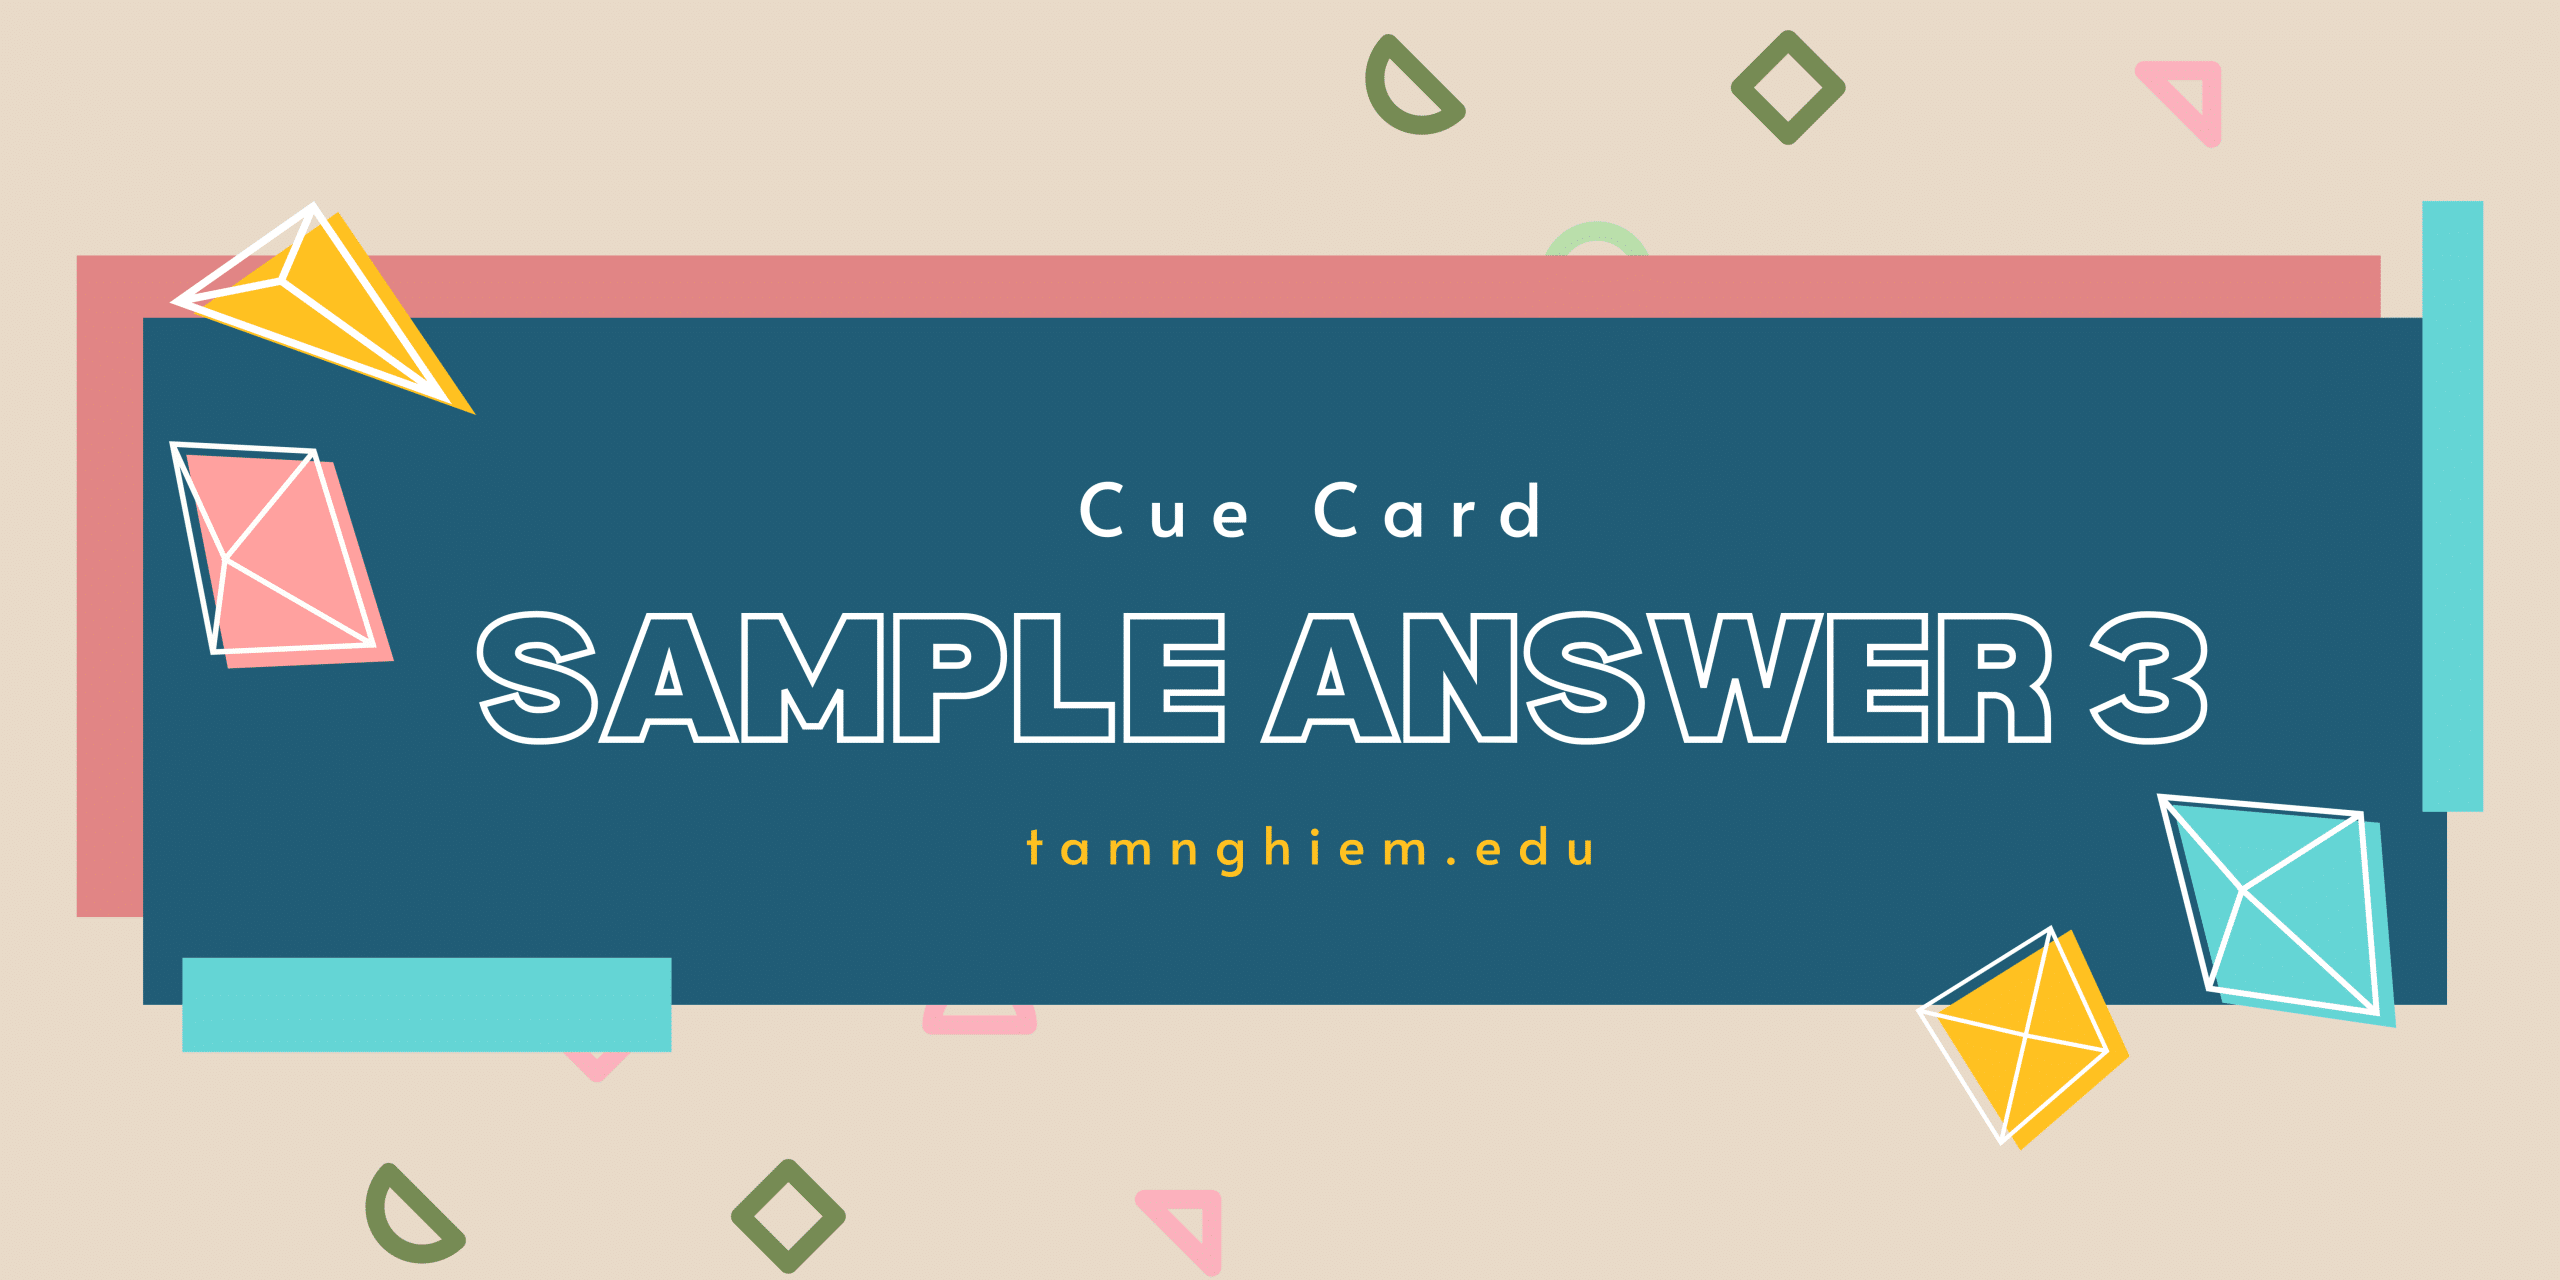 Bài mẫu Cue Card luyện tập Ielts Speaking Part 2 cho bạn học